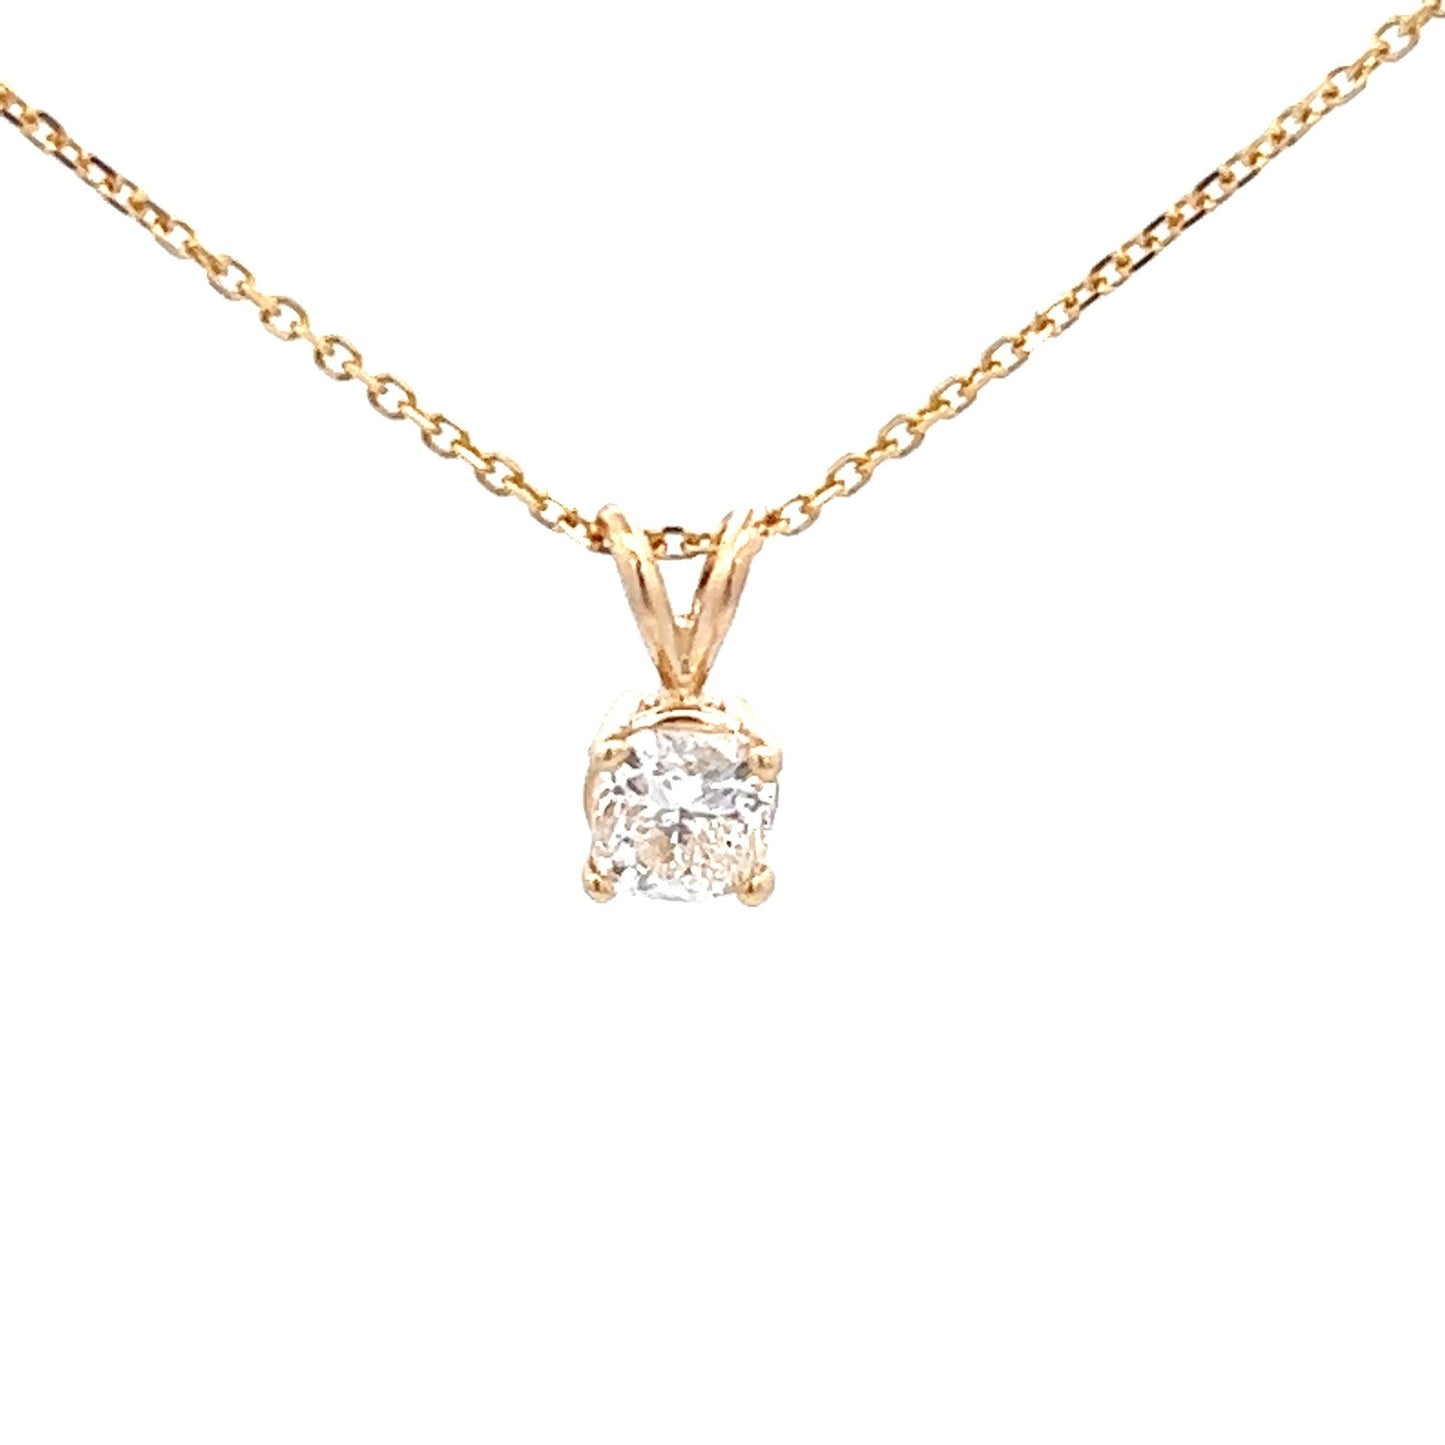 .71ct Cushion Cut Diamond Pendant Necklace 14K Yellow Gold Chain